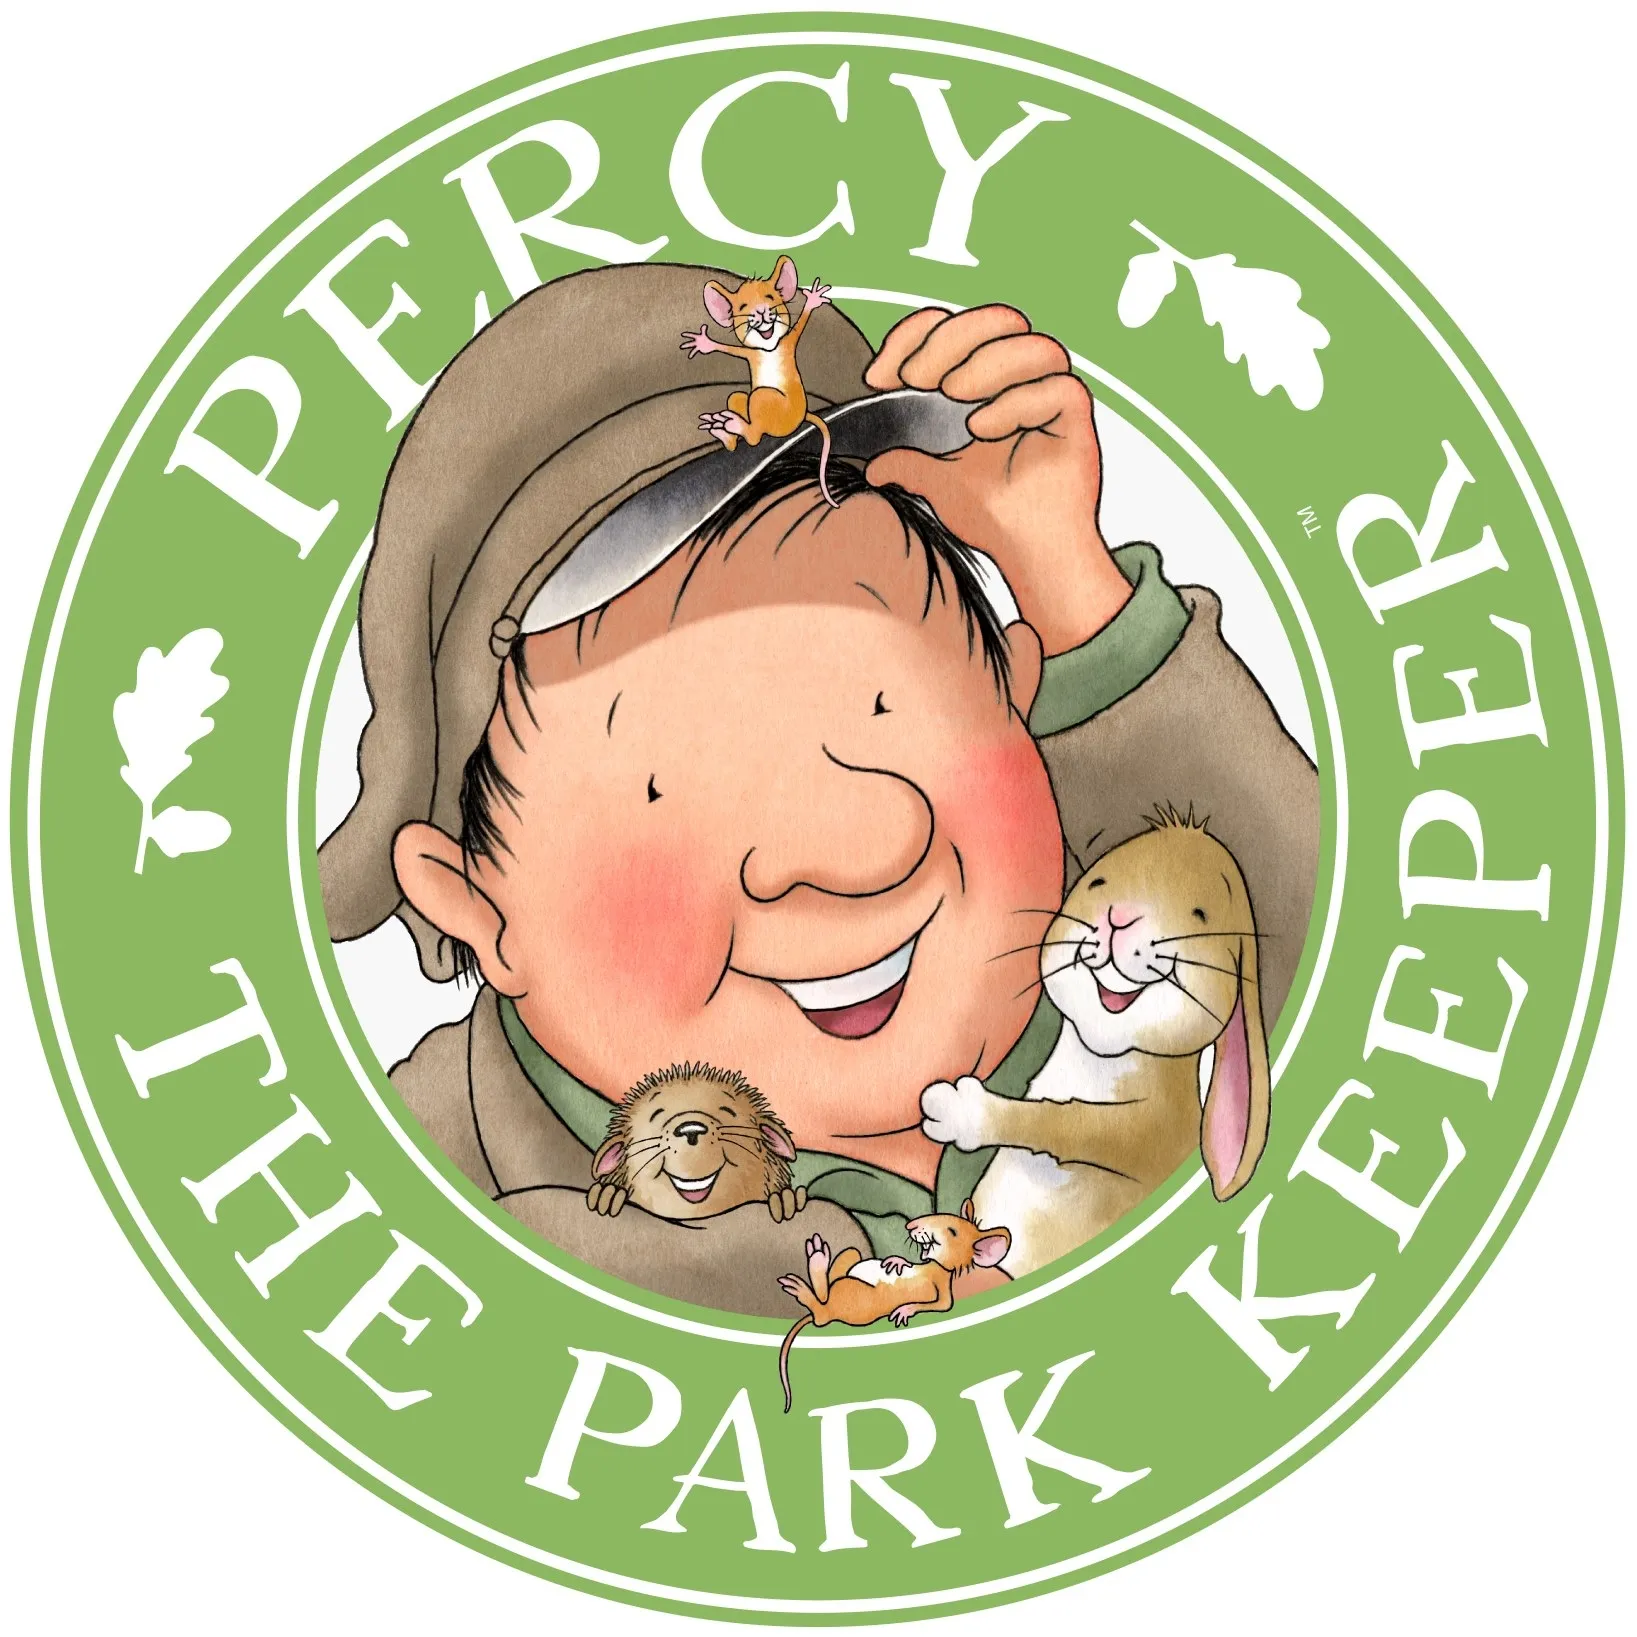 percytheparkkeeper.co.uk